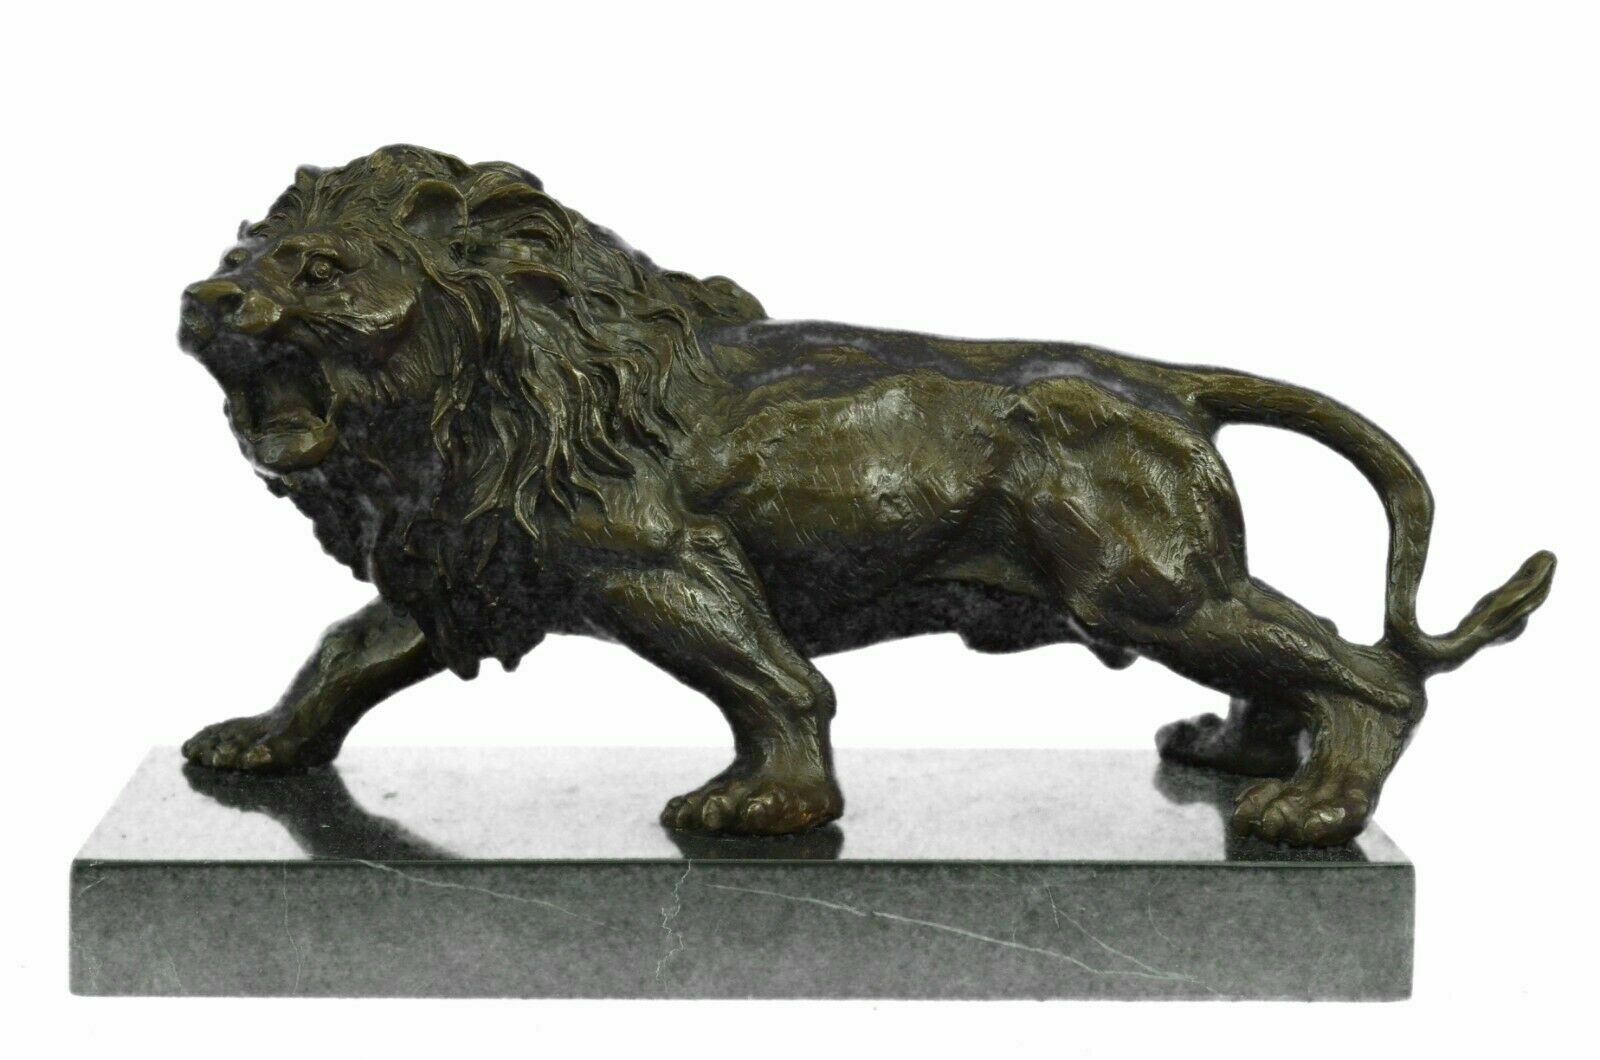 BRONZE LION SCULPTURE BY BARYE BRONZE SCULPTURE FIGURINE STATUES MASTERPIECE ART